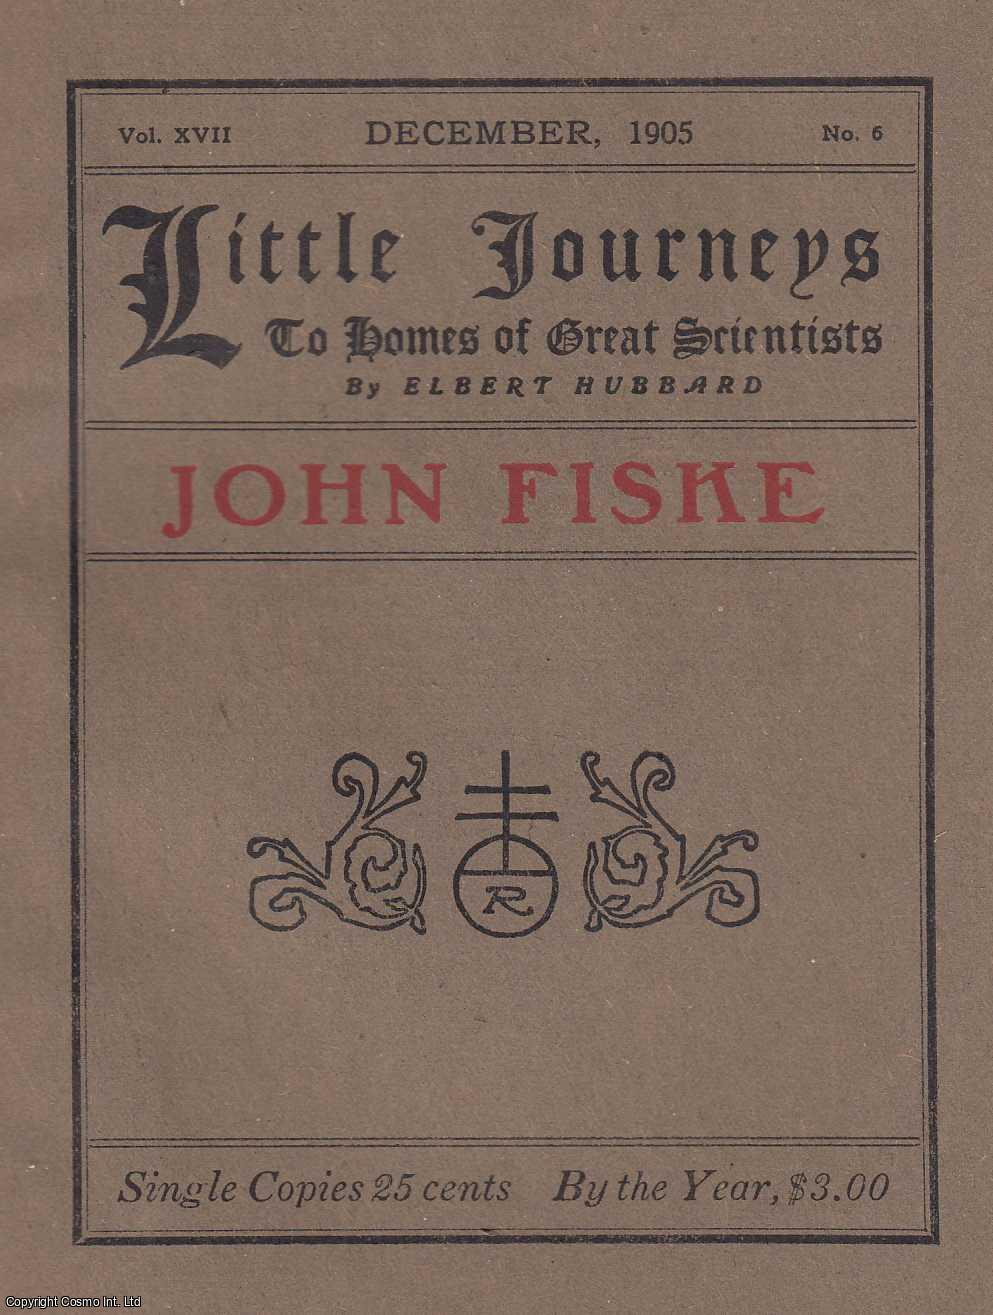 Elbert Hubbard - John Fiske. Little Journeys to Homes of Great Scientists. Published by The Roycrofters 1905.